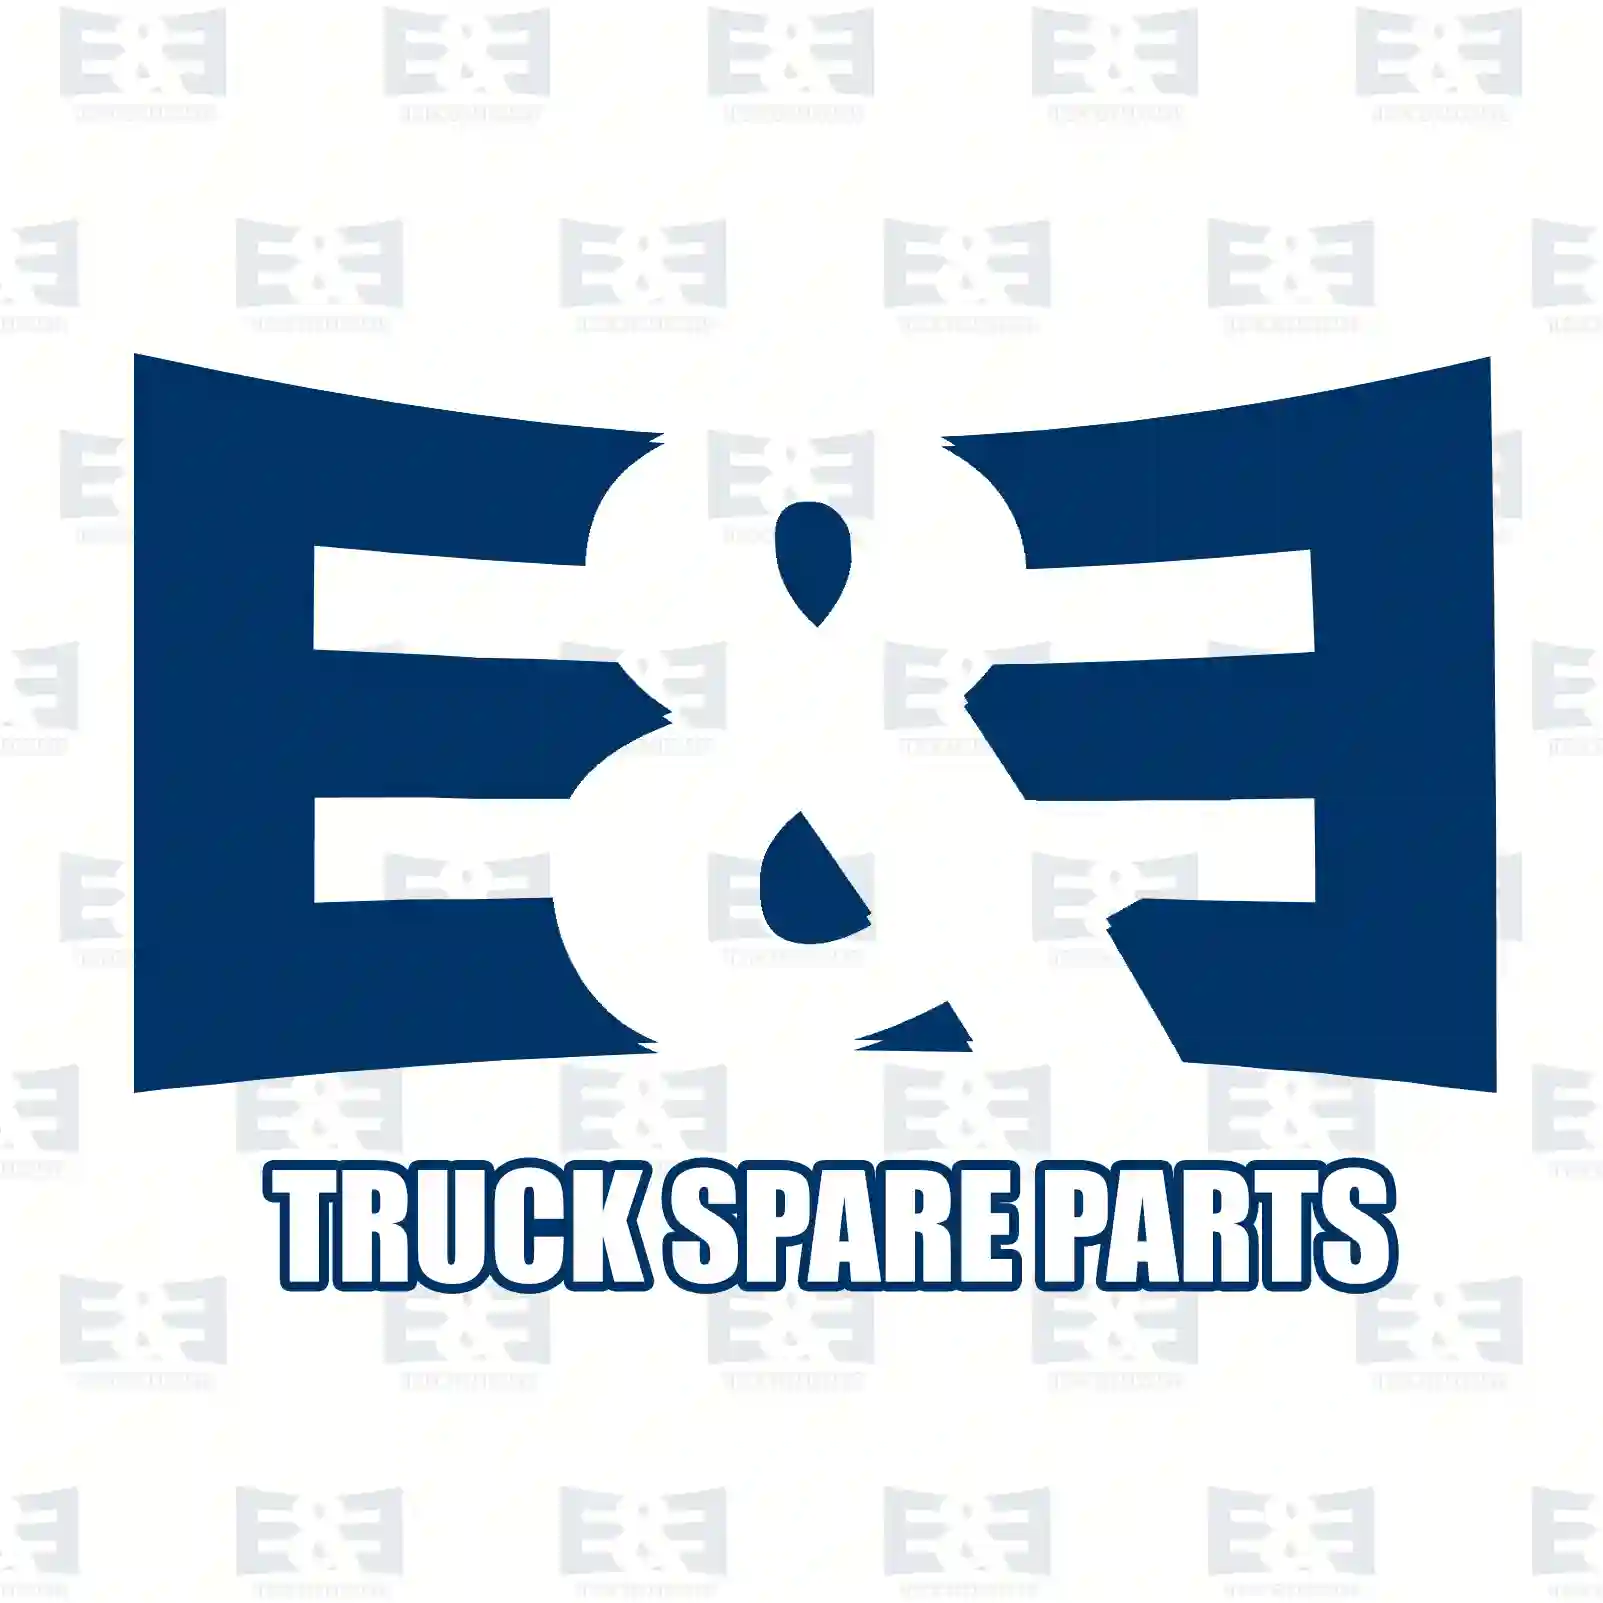 Control Arm Control arm, EE No 2E2270643 ,  oem no:5006172093, 5010347868, 5801891029, 5006172093, 5010347868 E&E Truck Spare Parts | Truck Spare Parts, Auotomotive Spare Parts